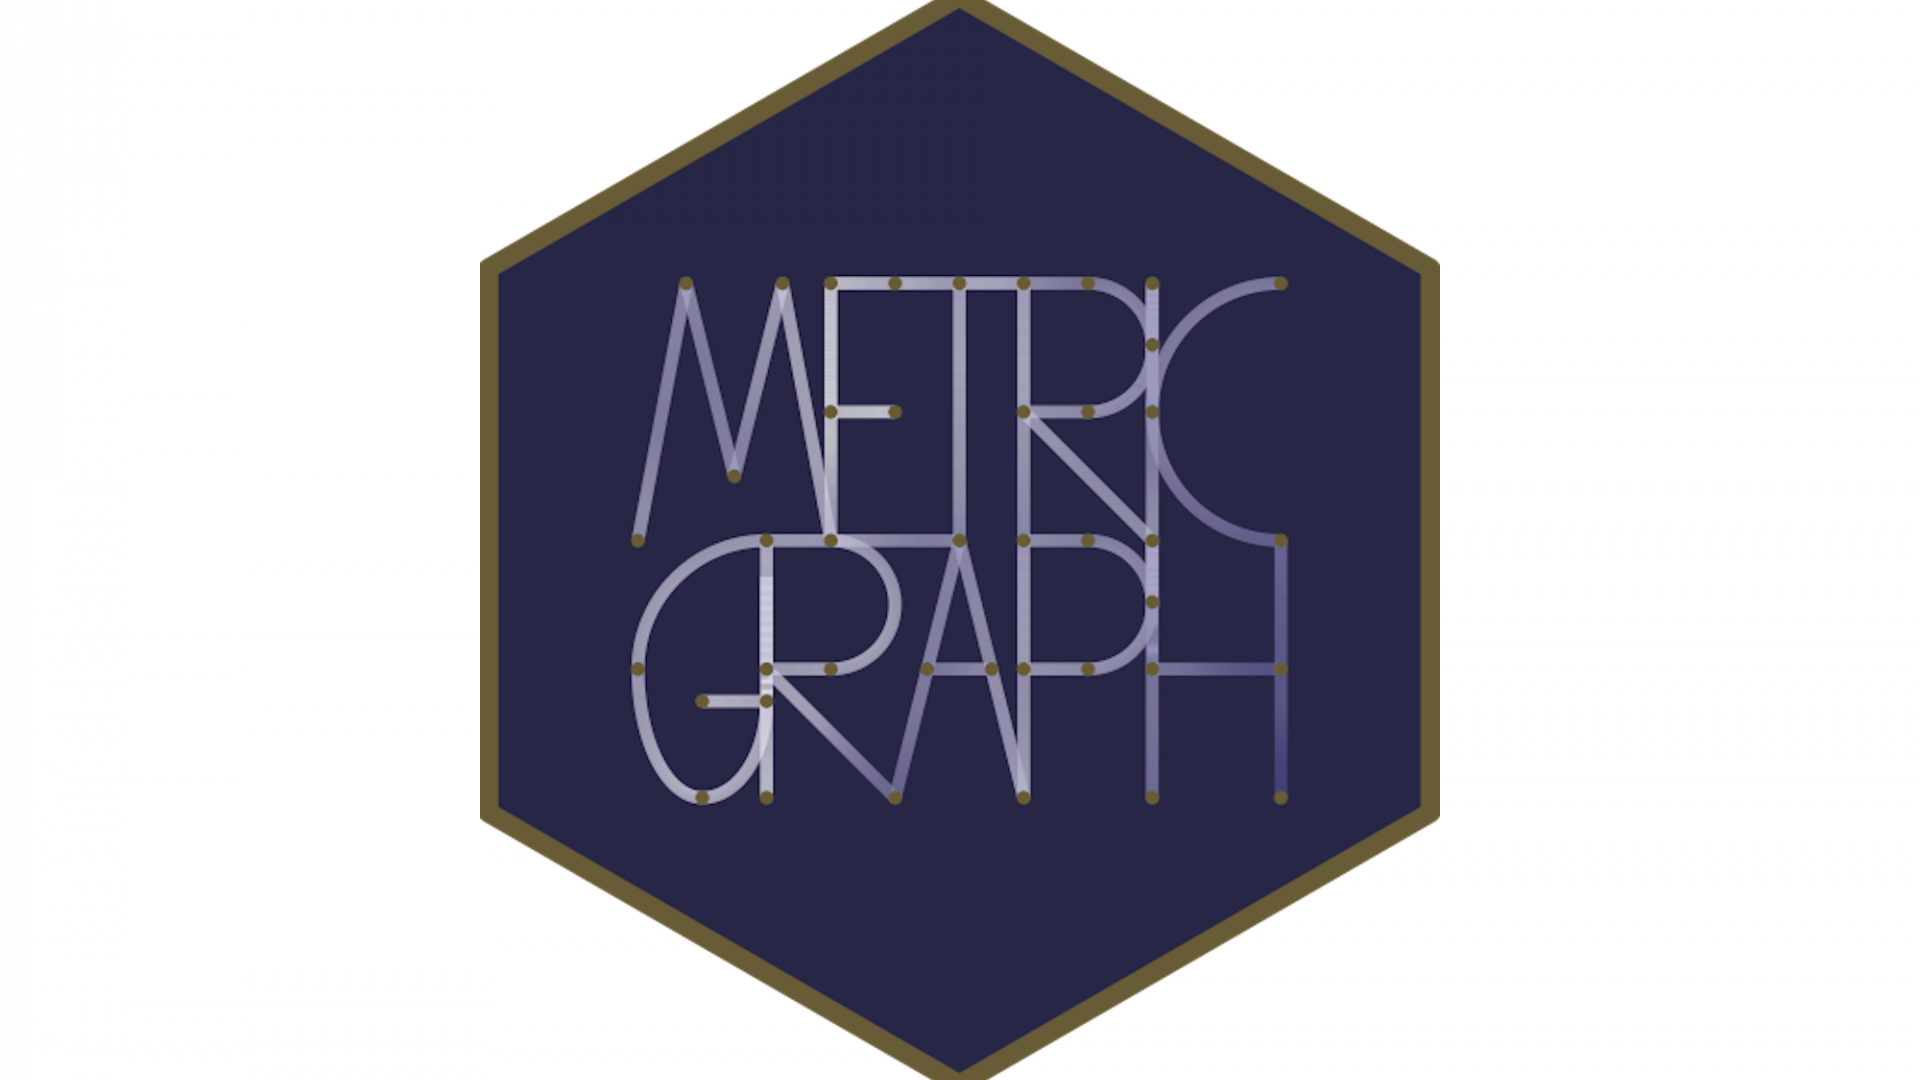 MetricGraph